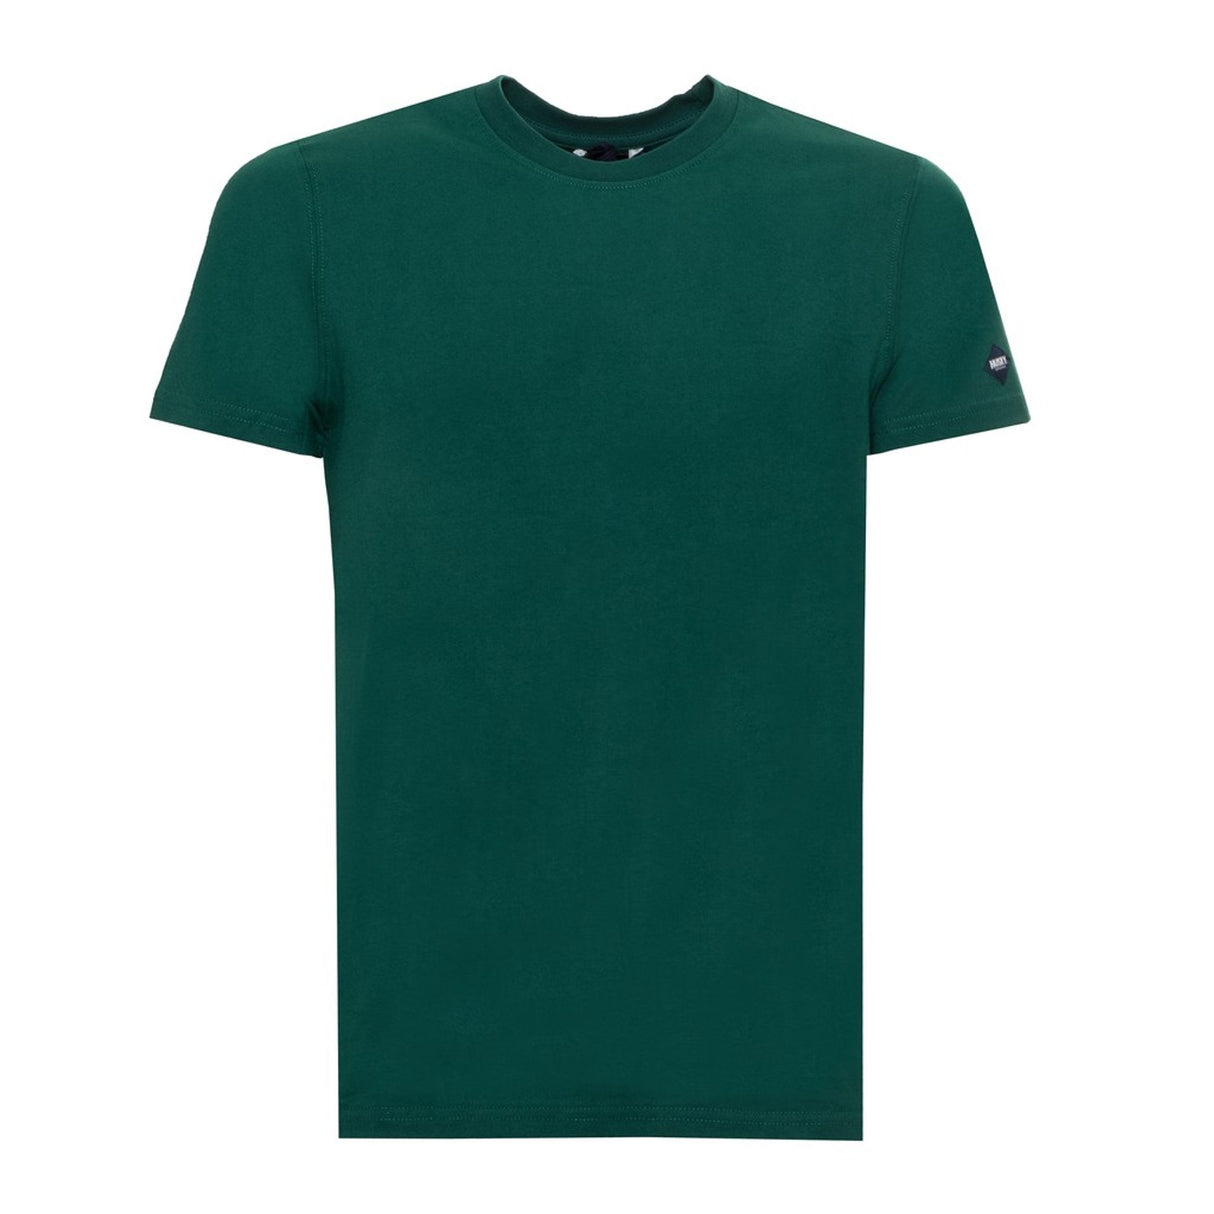 T-shirt men's t-shirt spring summer 100% cotton crewneck t-shirt solid color short sleeves logo breathable t-shirt comfortable t-shirt